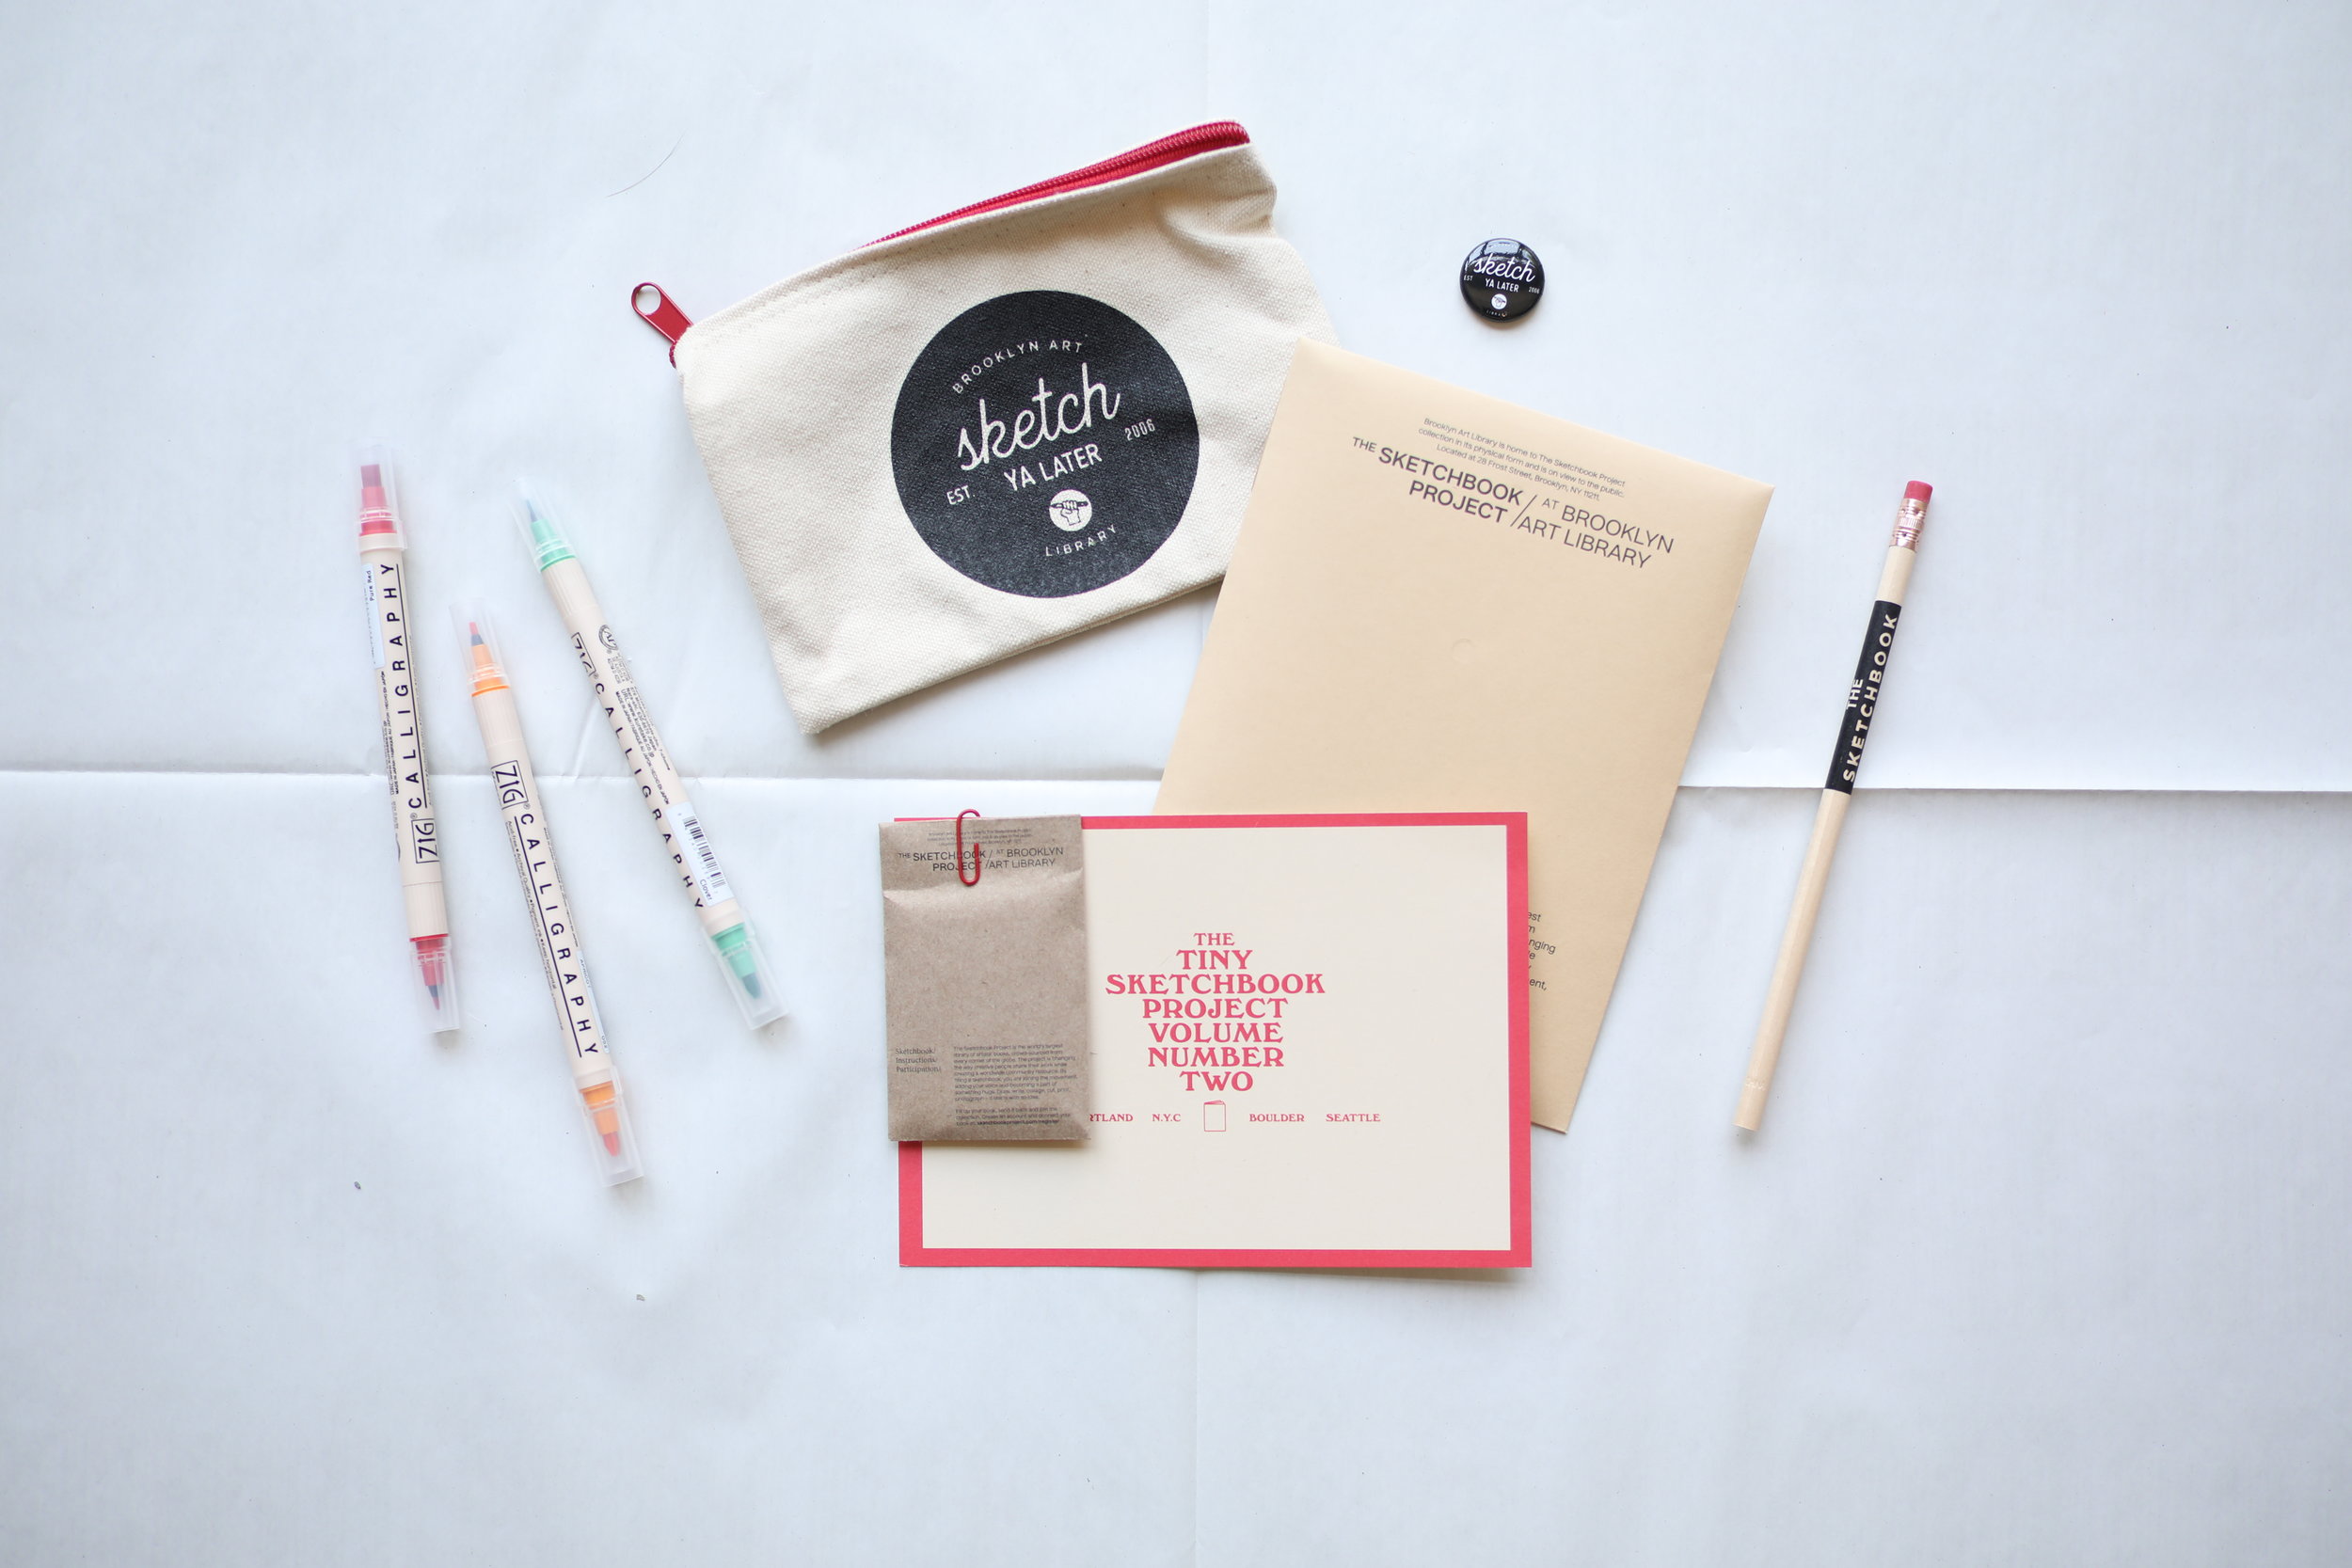 The Sketchbook Kit: Artist's Guide - New, Open Box